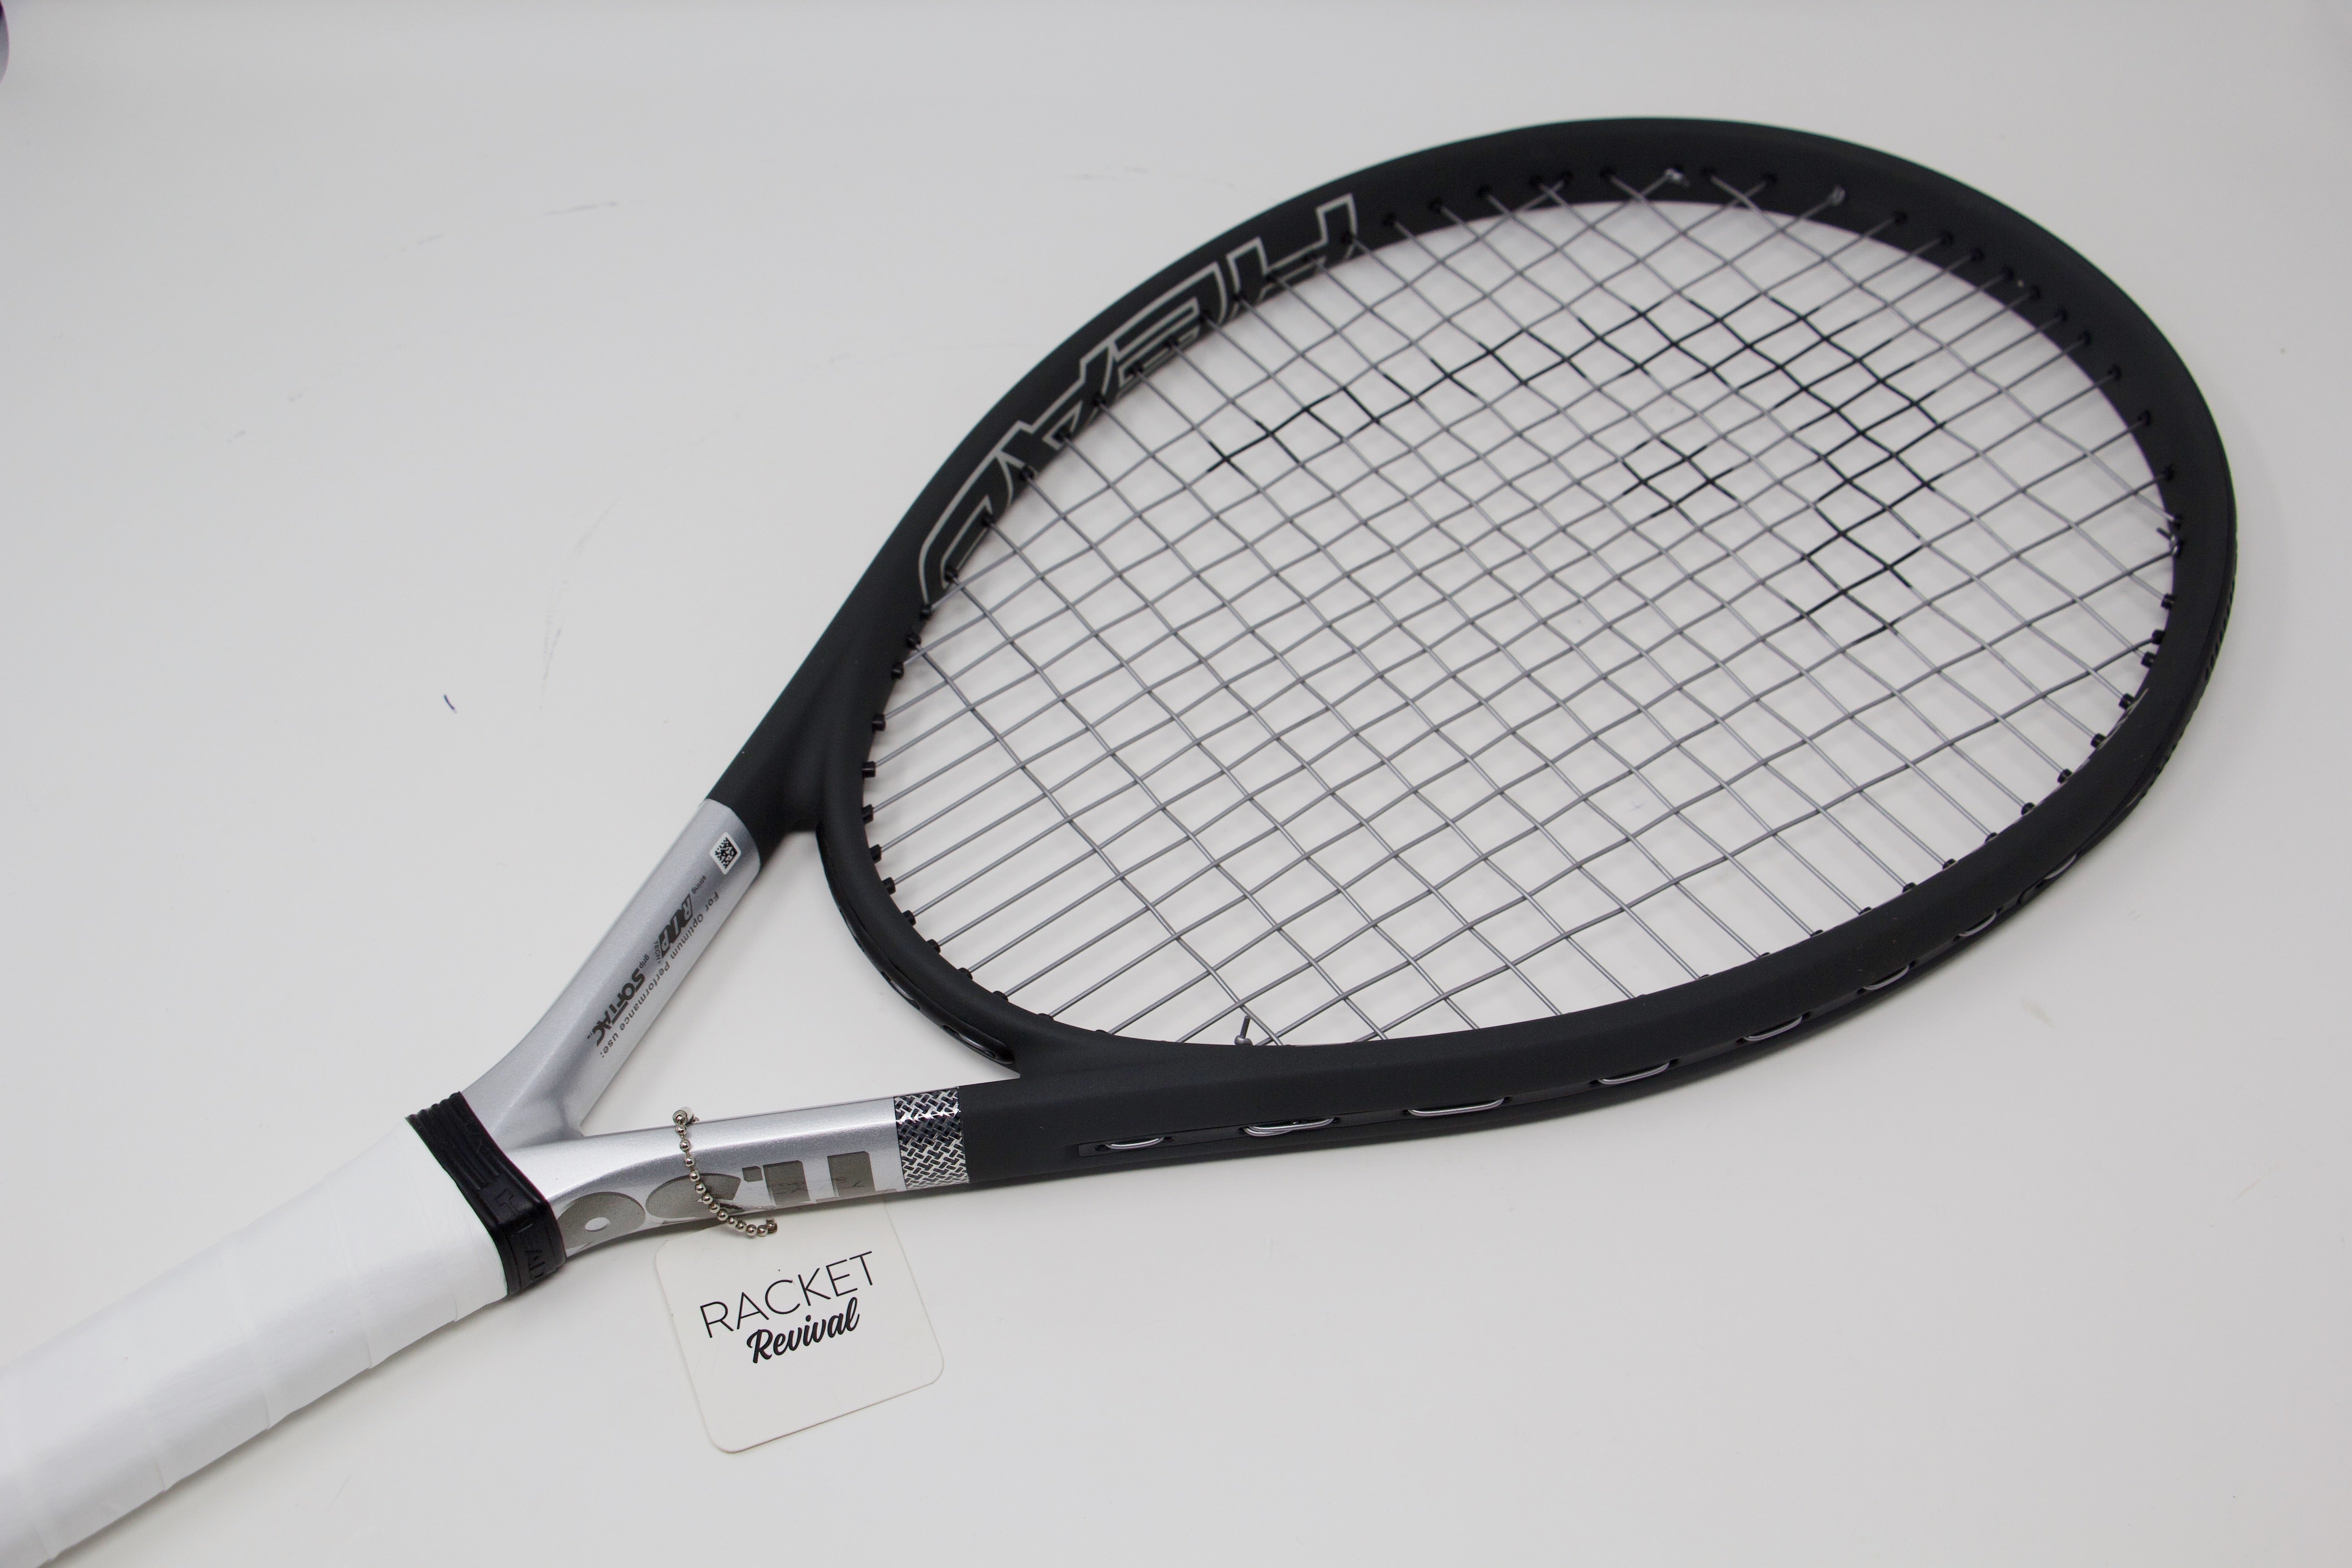 Head Ti.S6 Refurbished Tennis Racket